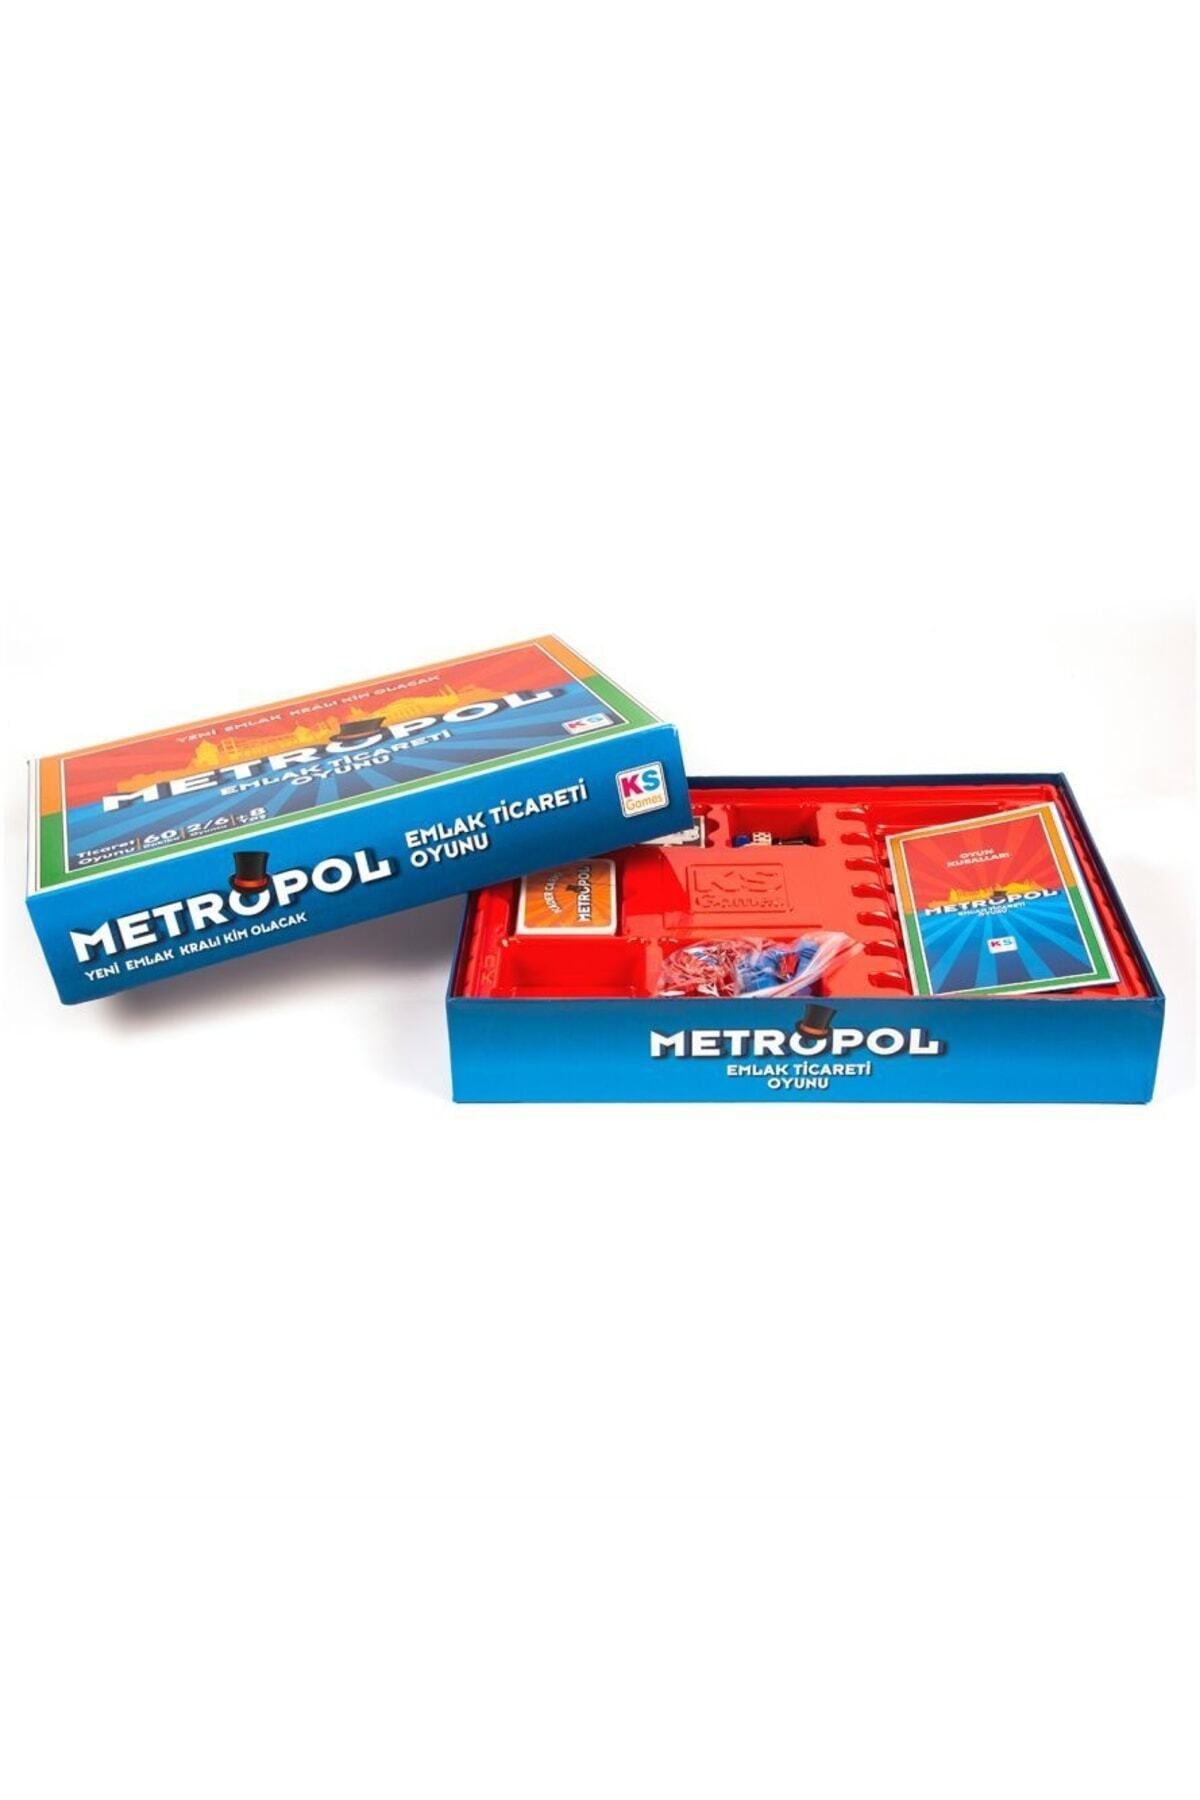 Mega Oyuncak Ks Game Metropol Emlak Ticaret Oyunu Monopoly Monopoli Yeni Model